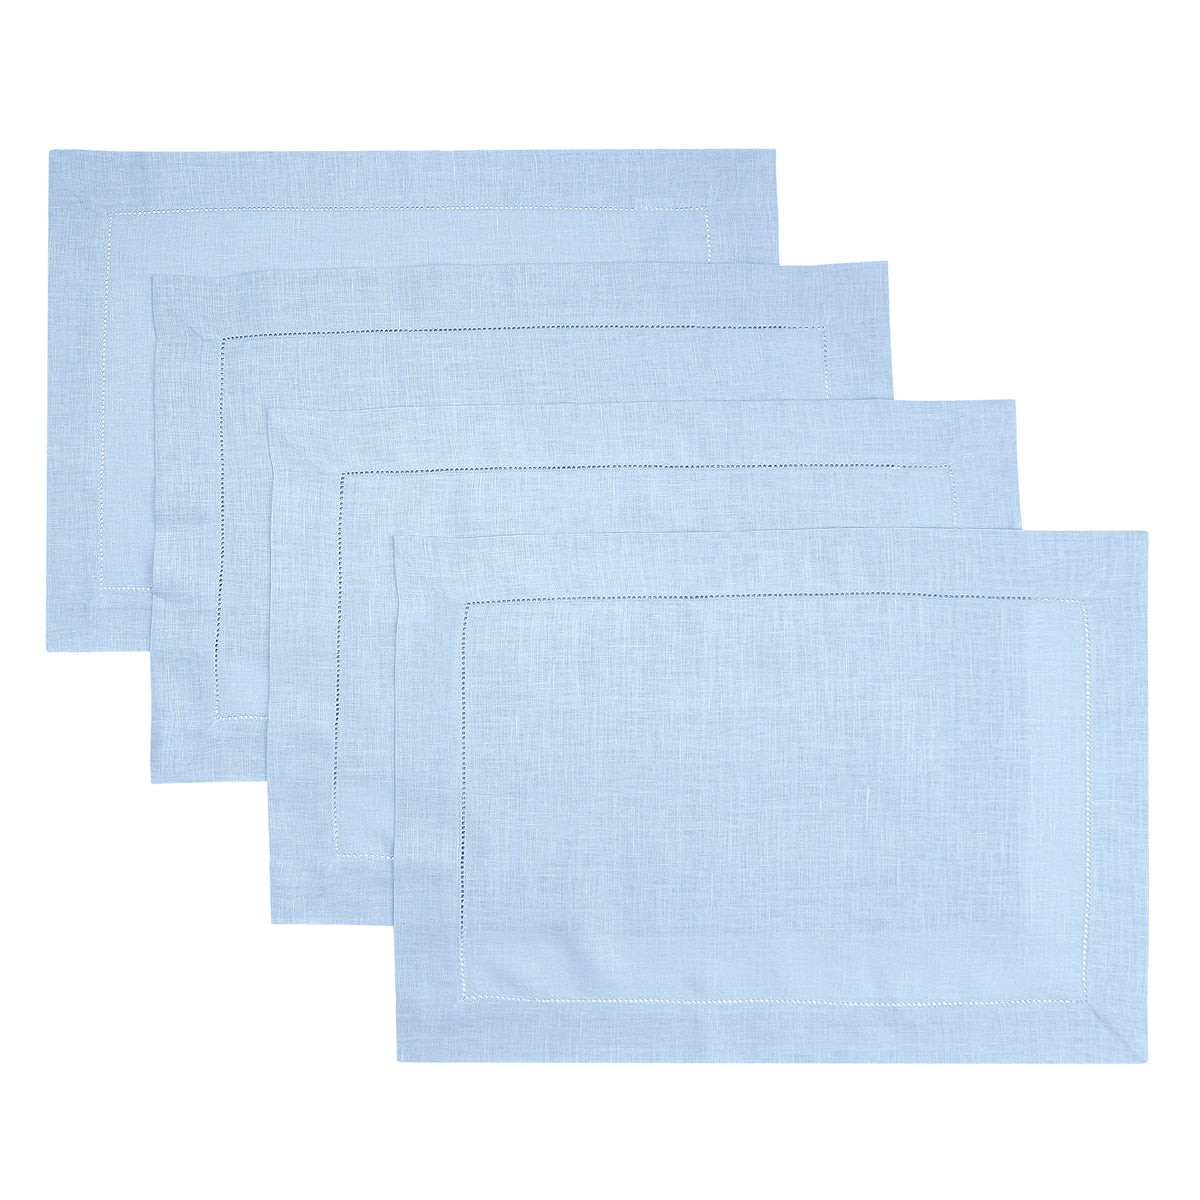 Powder Blue Linen Placemats 14 x 19 Inch Set of 4 - Hemstitch